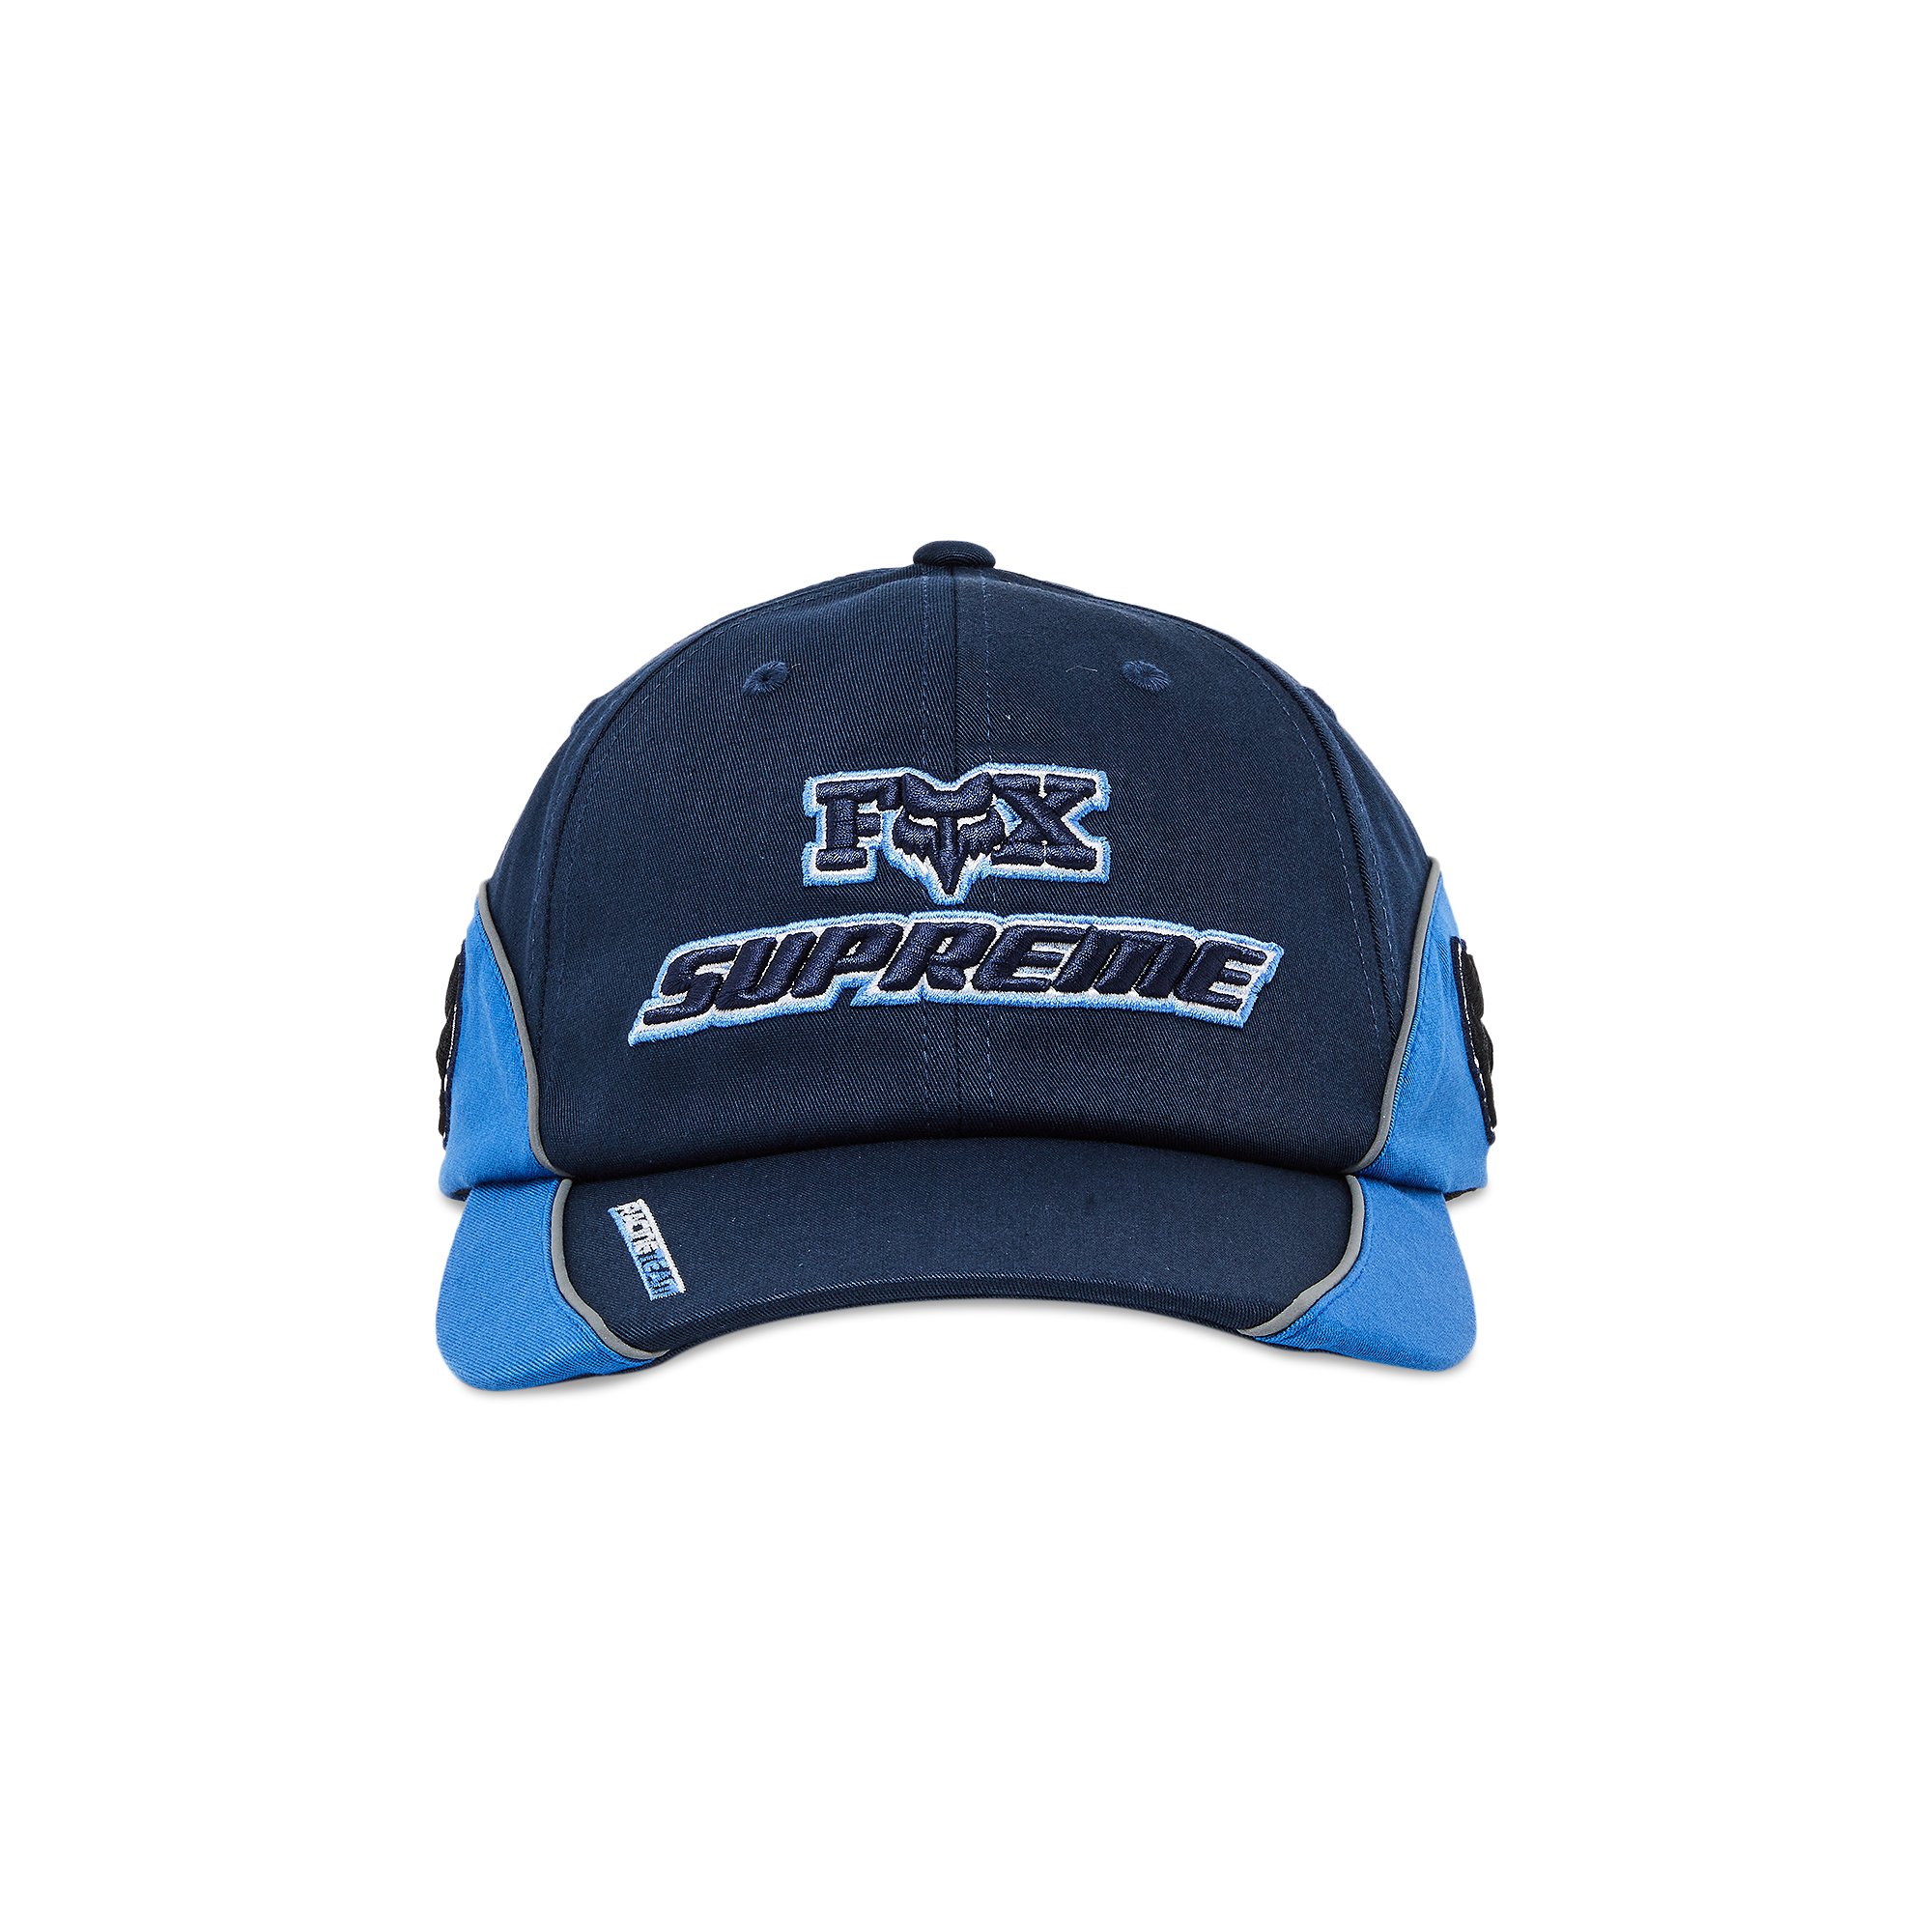 Supreme x Fox Racing, 6 панелей, синий